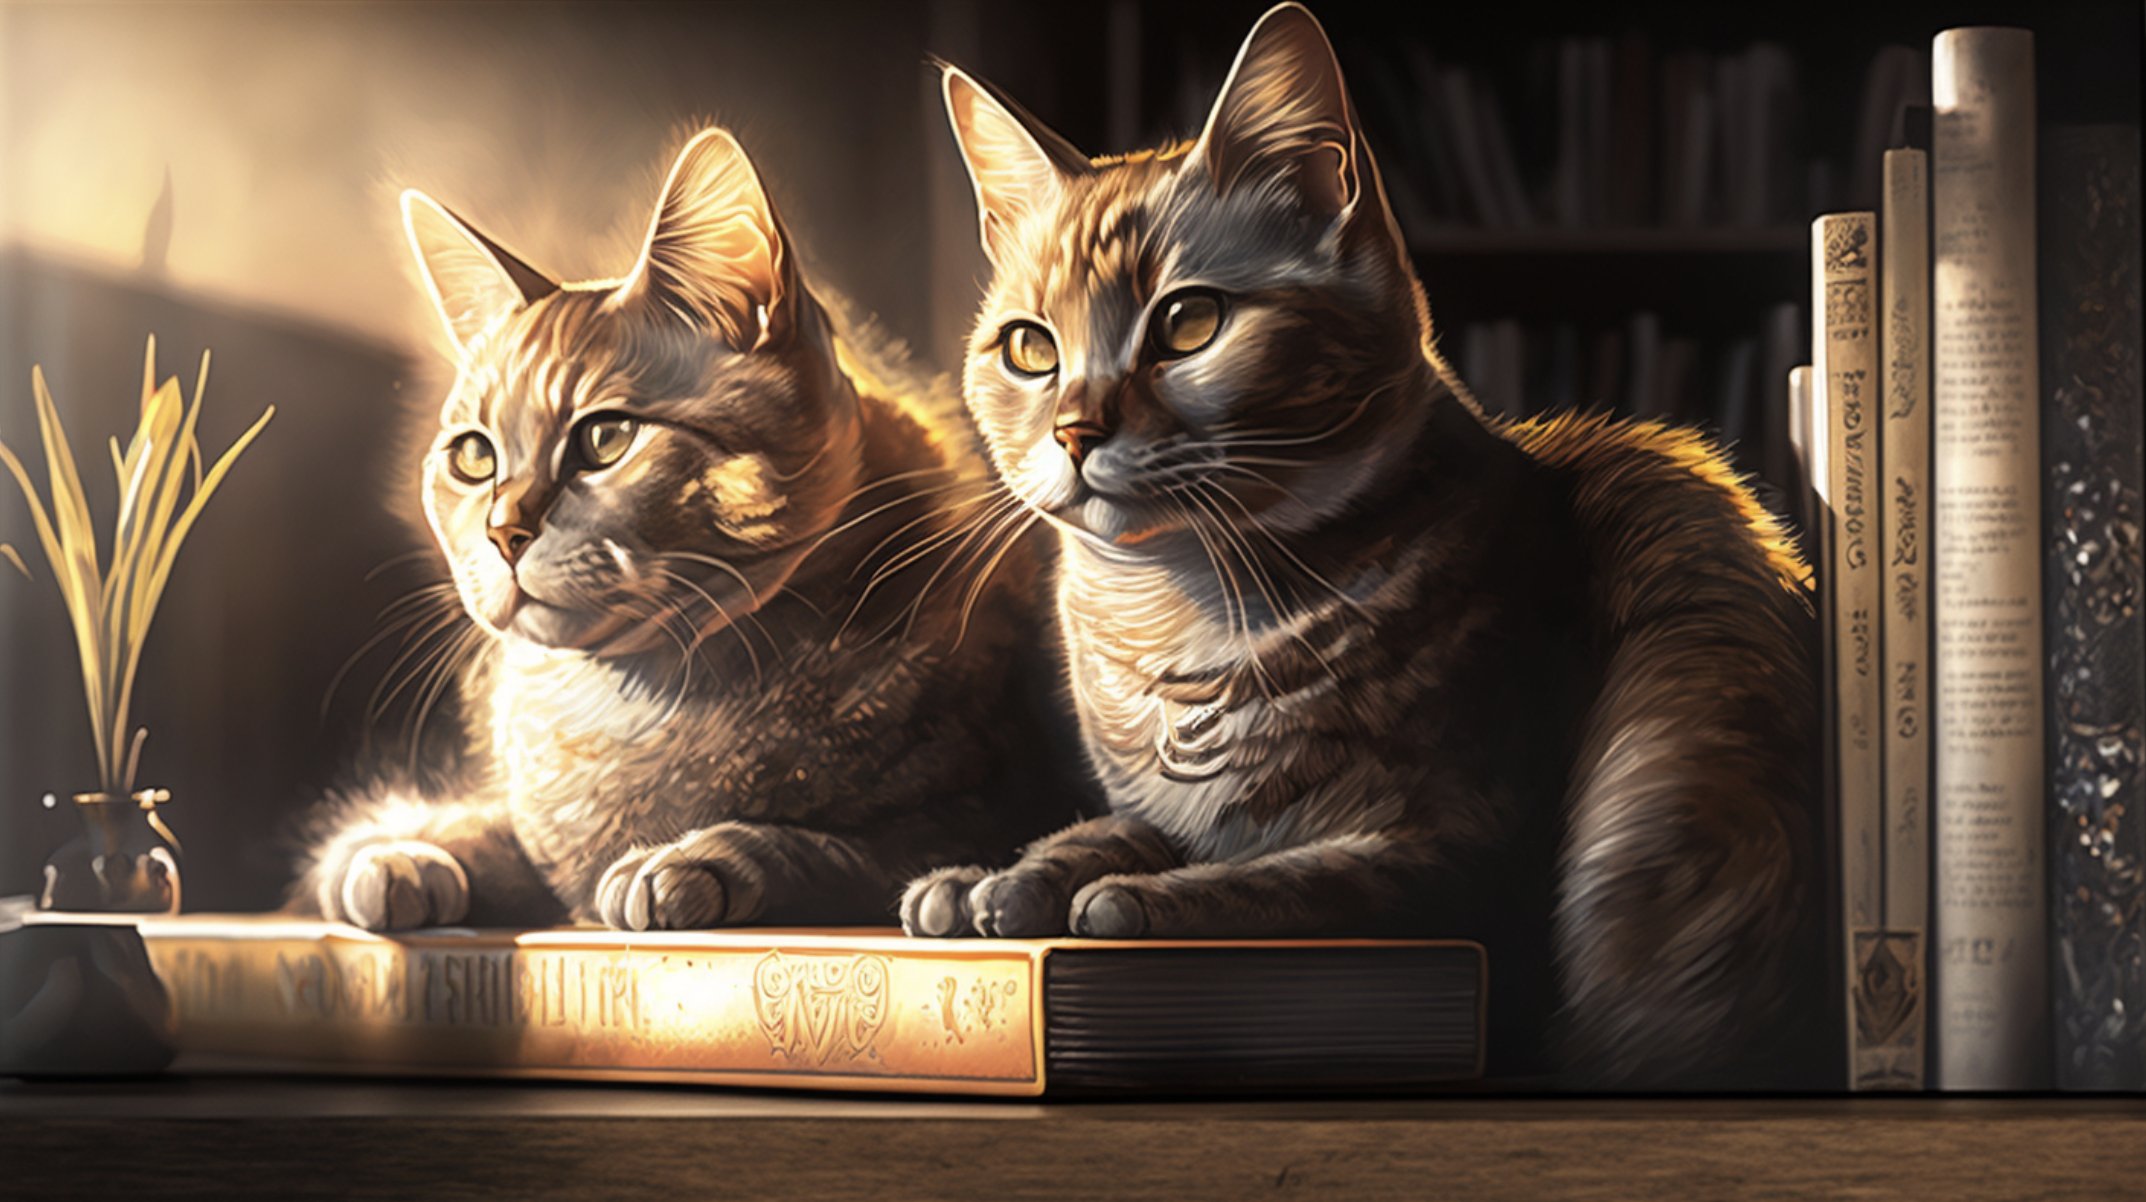 DIY Cat Bookshelf: Build Your Feline Friend’s Dream Hangout